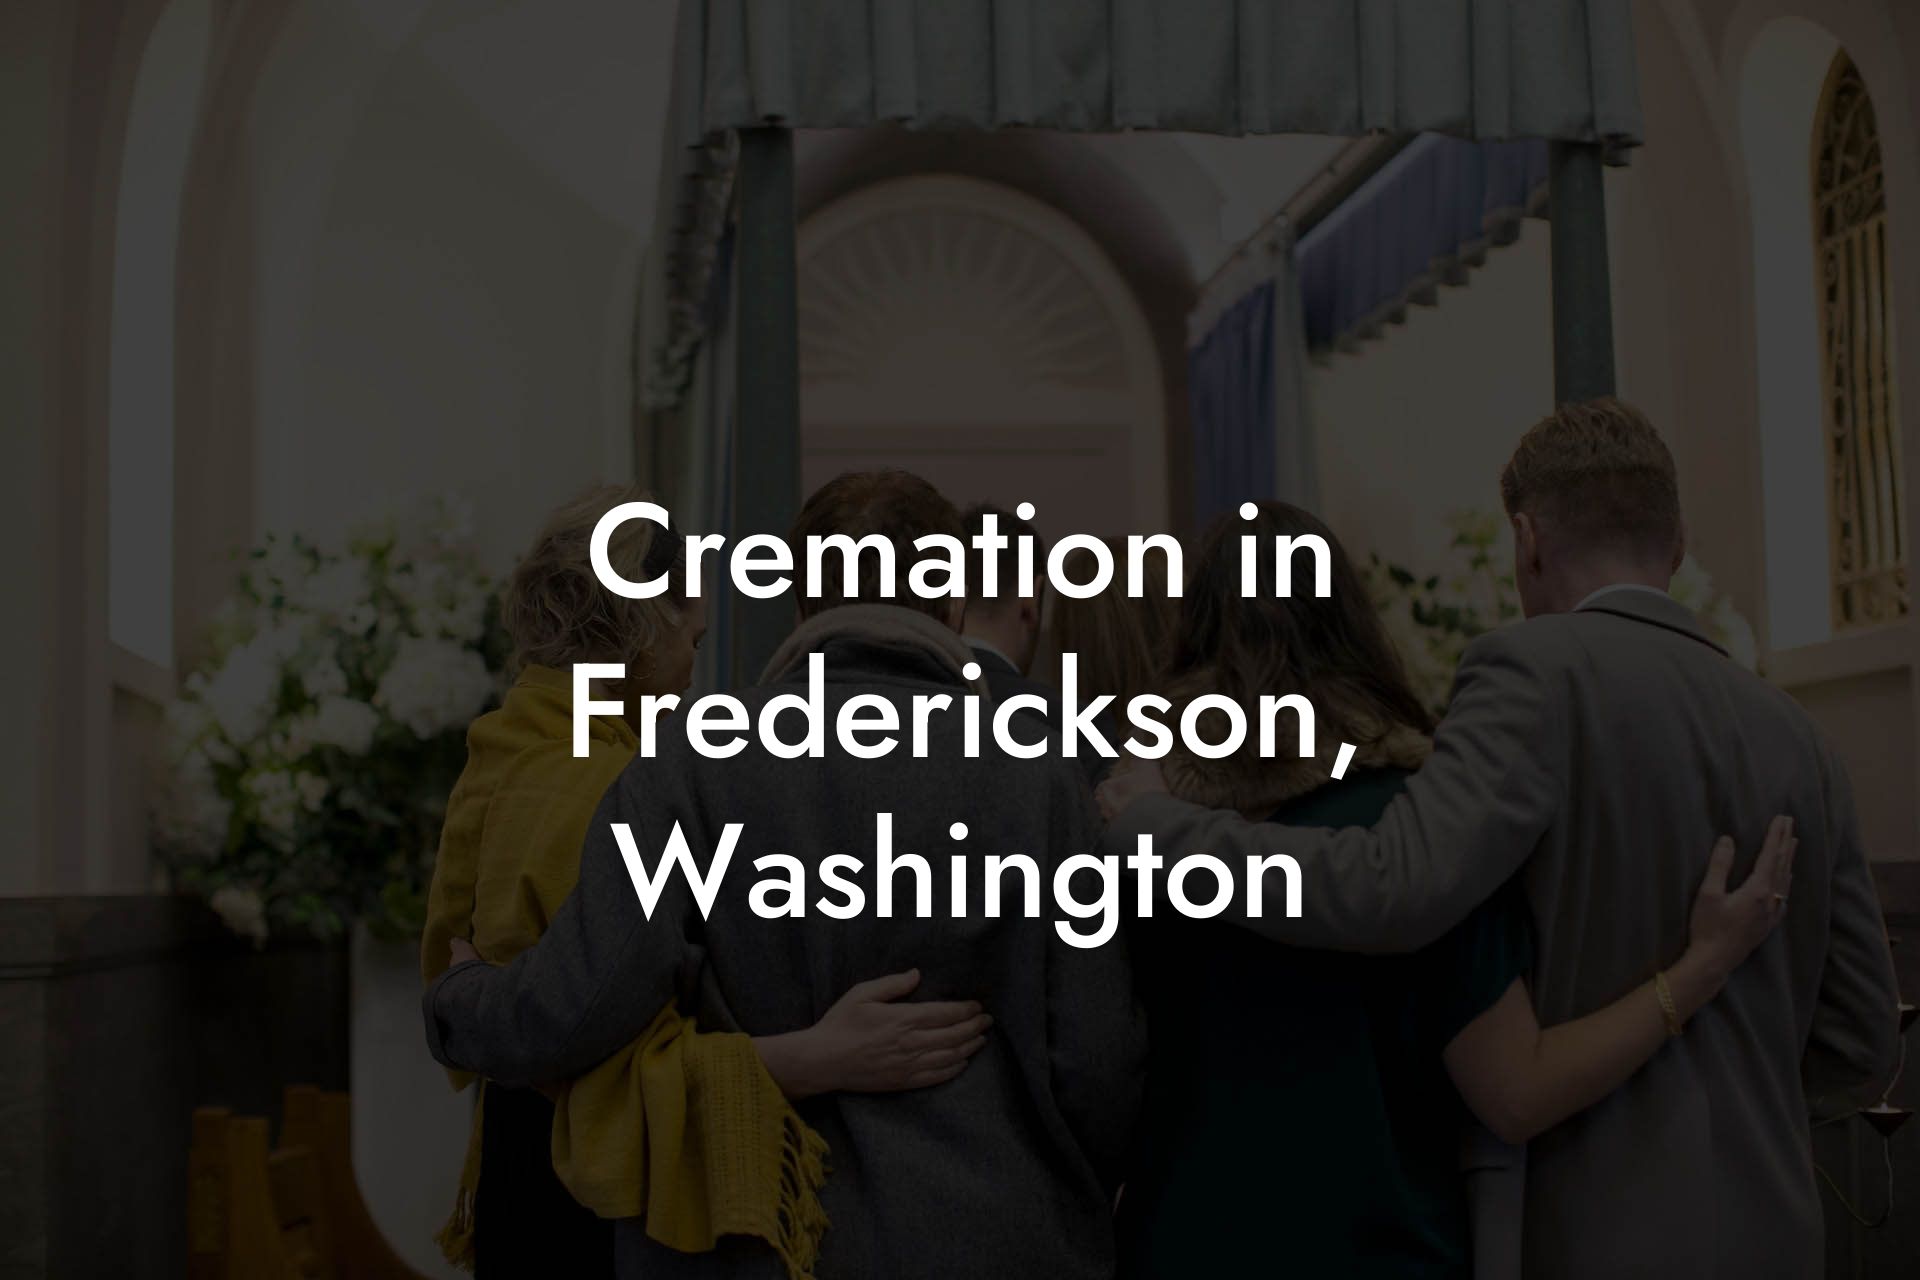 Cremation in Frederickson, Washington